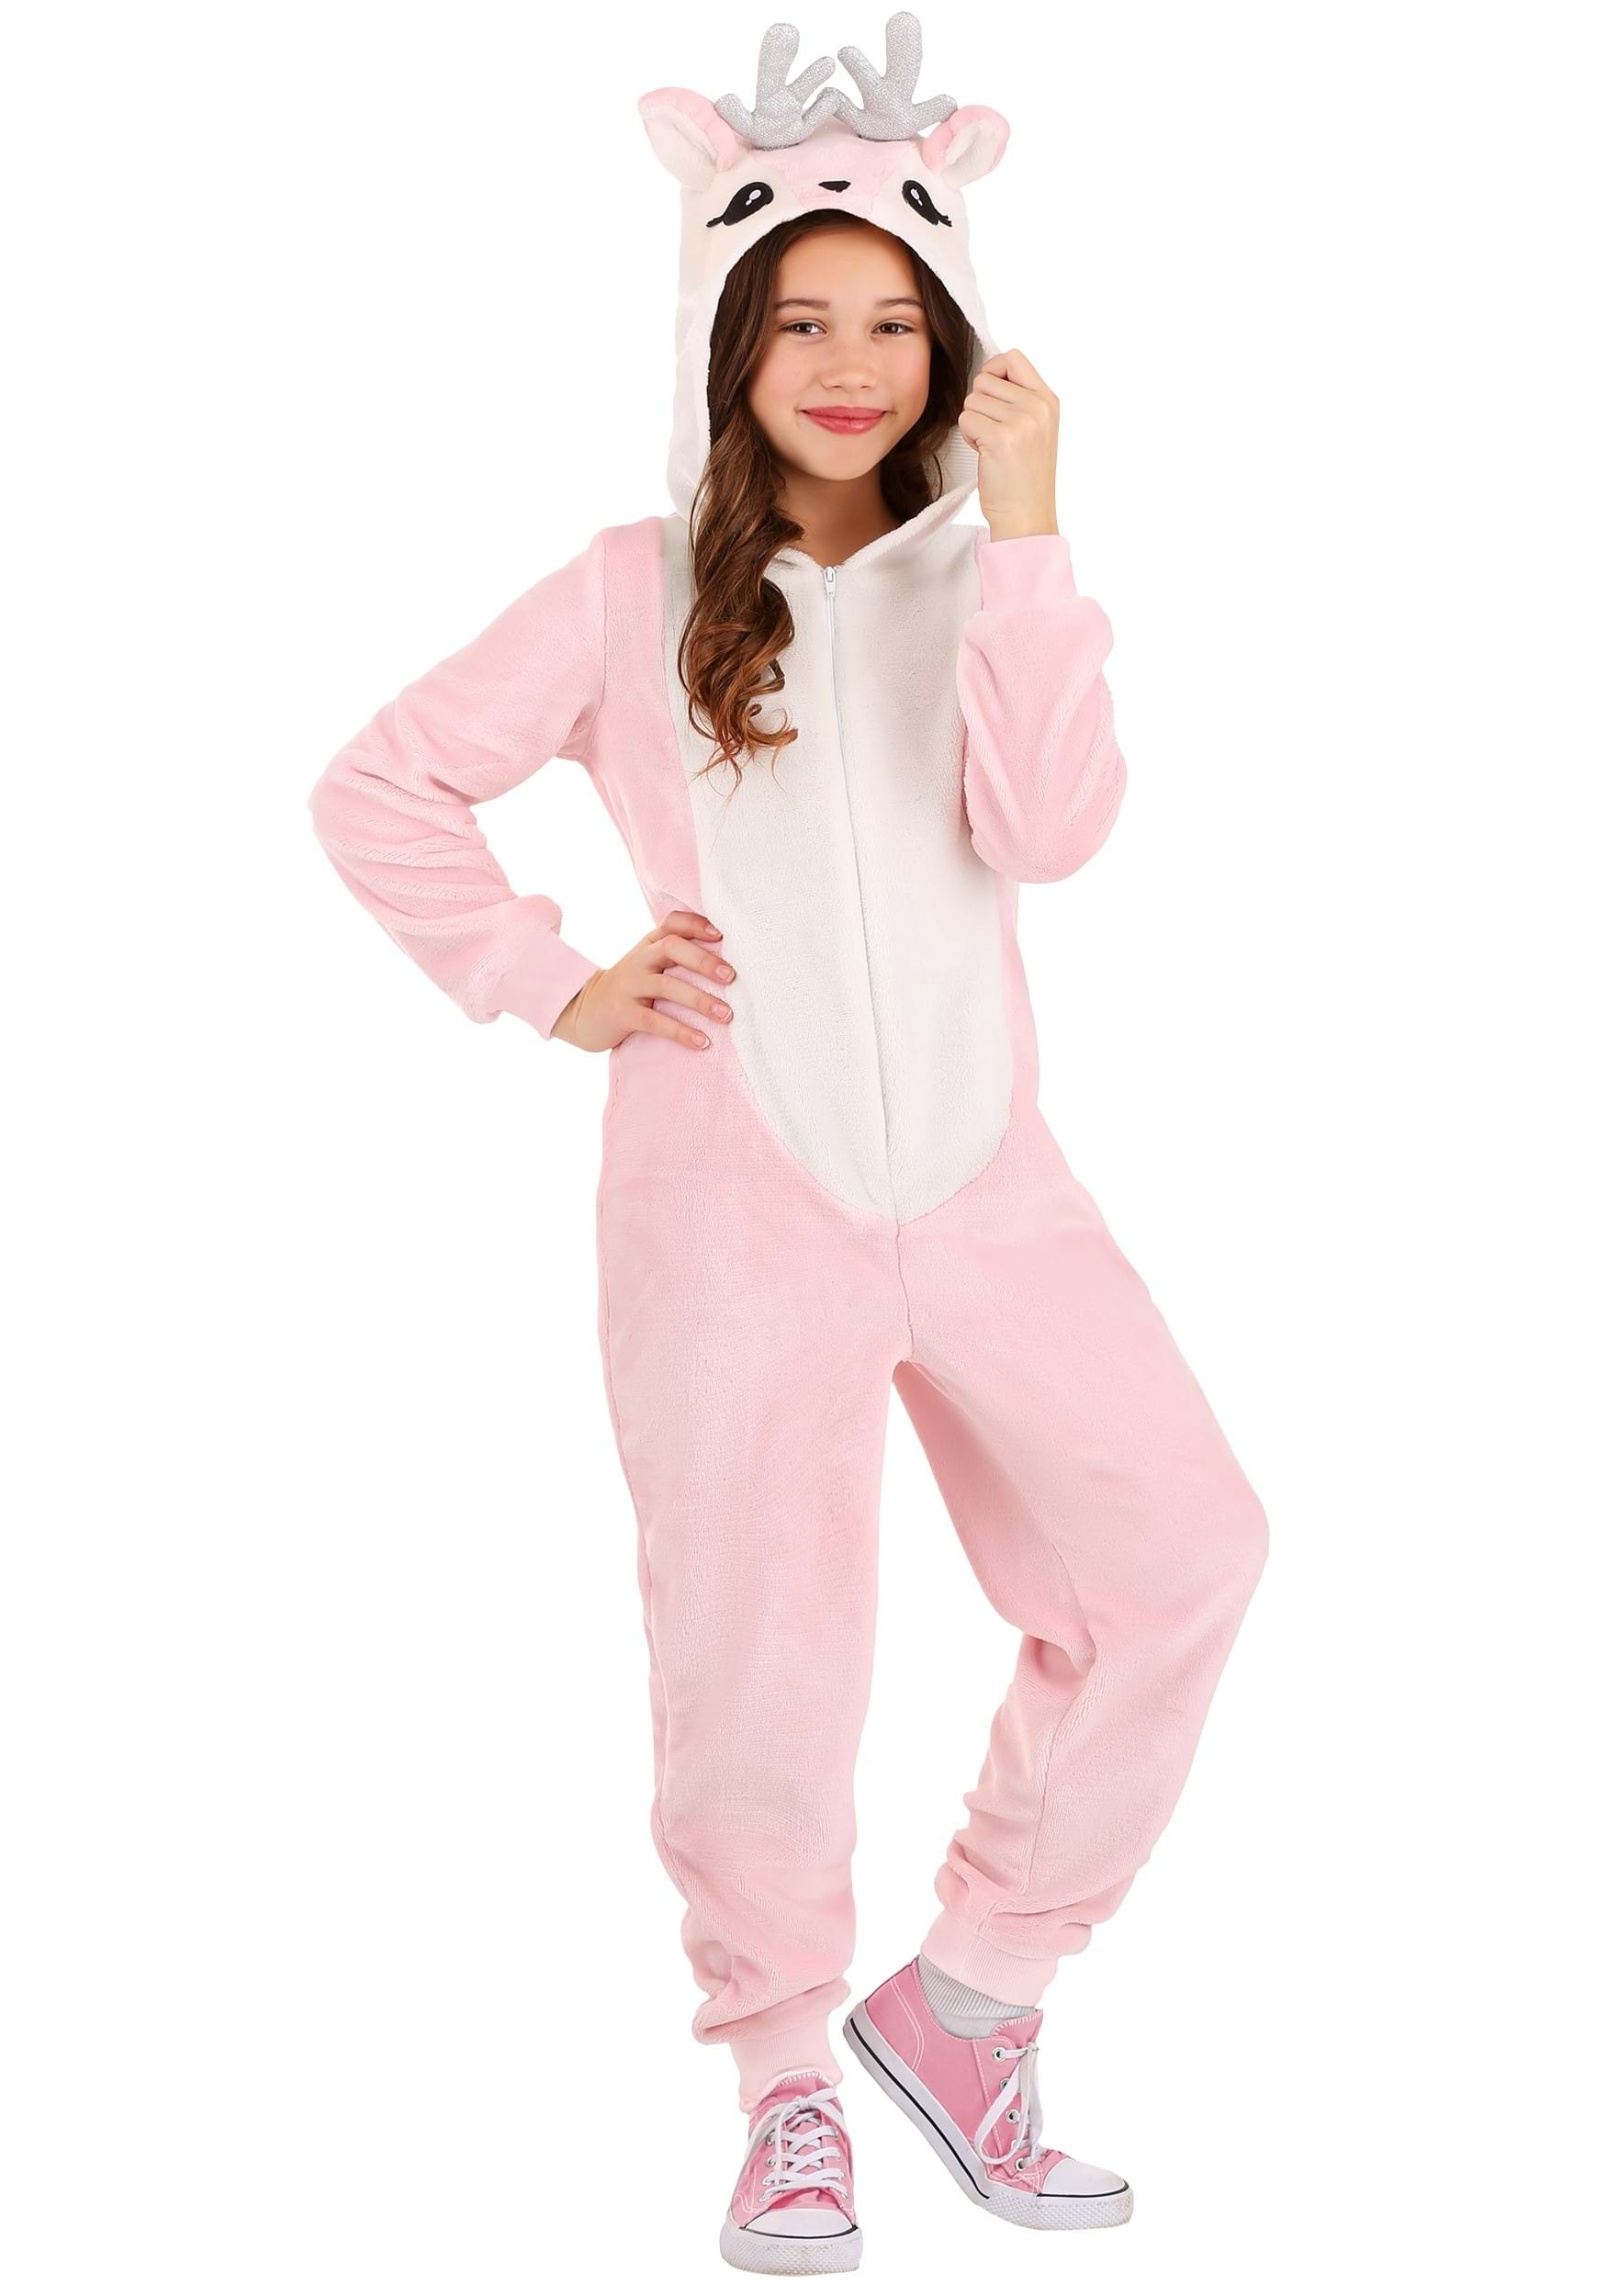 Photos - Fancy Dress FUN Costumes Pink Deer Girl's Costume Pink/White